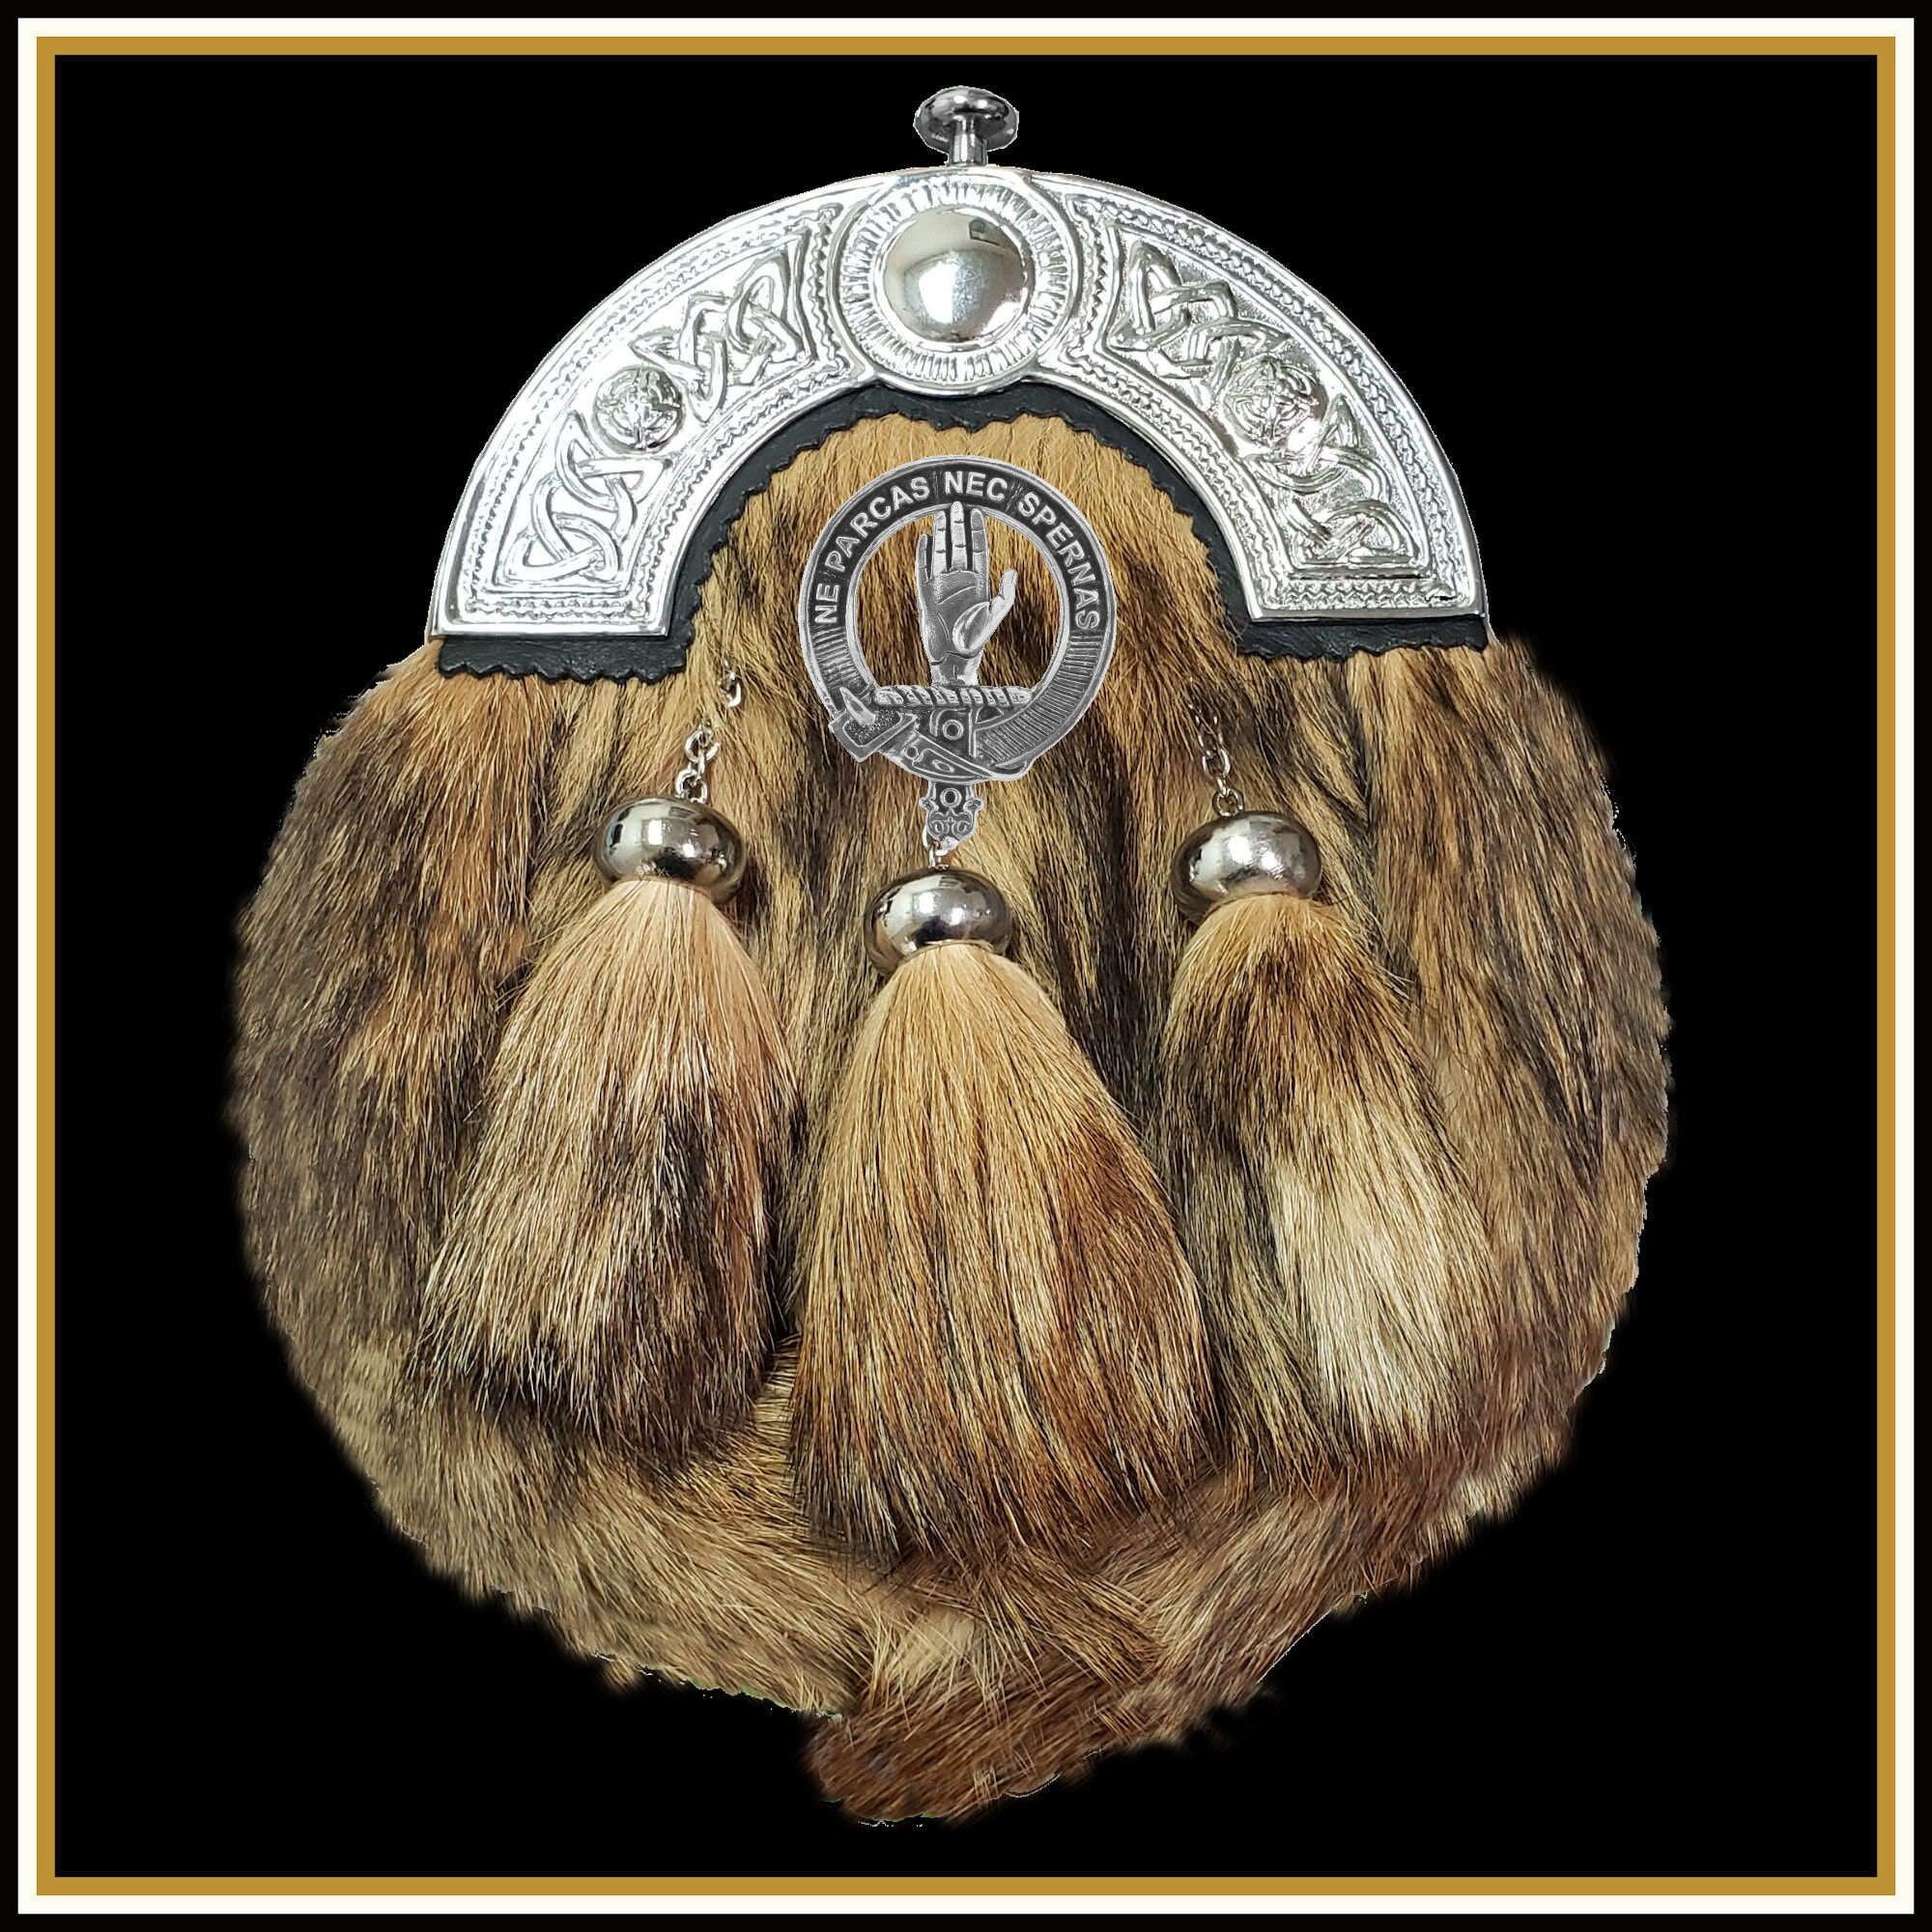 Lamont Scottish Clan Crest Badge Dress Fur Sporran